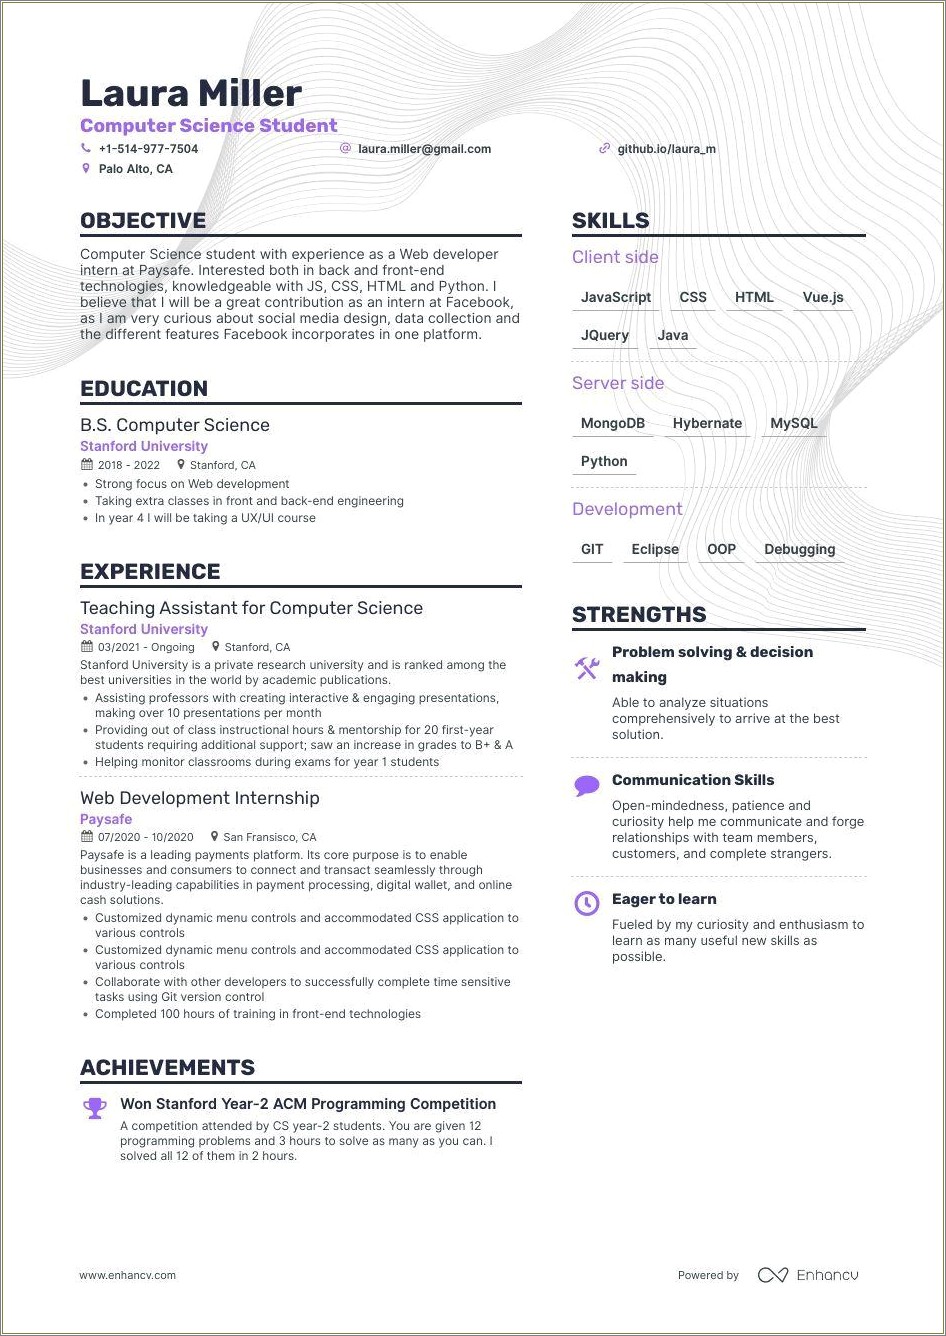 Resume Technical Skills Or Computer Skills